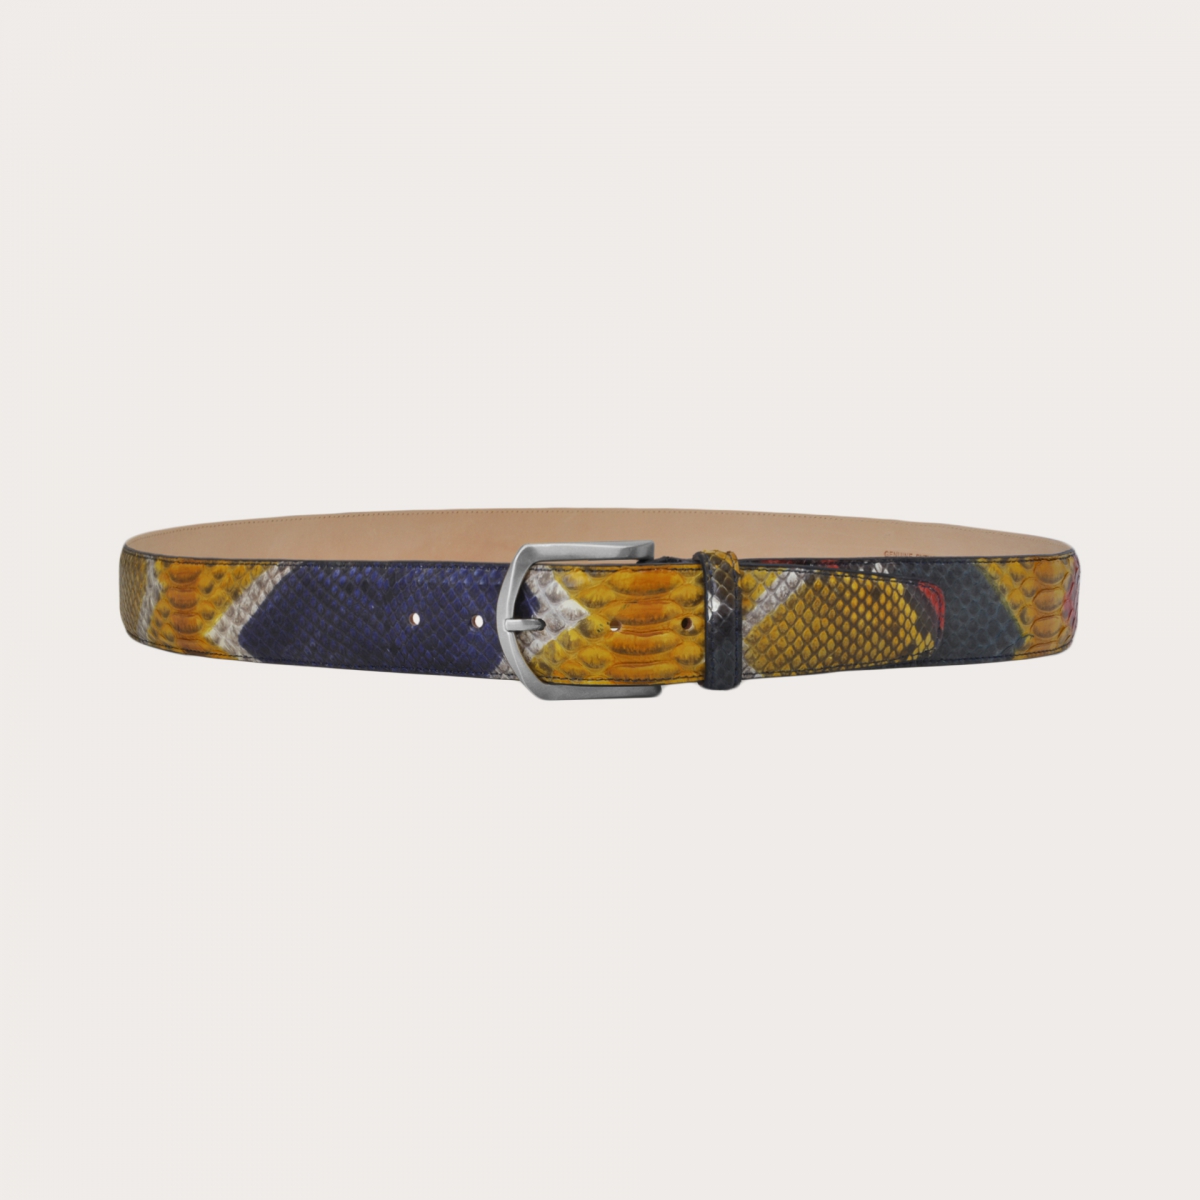 BRUCLE Cintura alta pitone sportiva con fibbia argento nickel free, multicolor